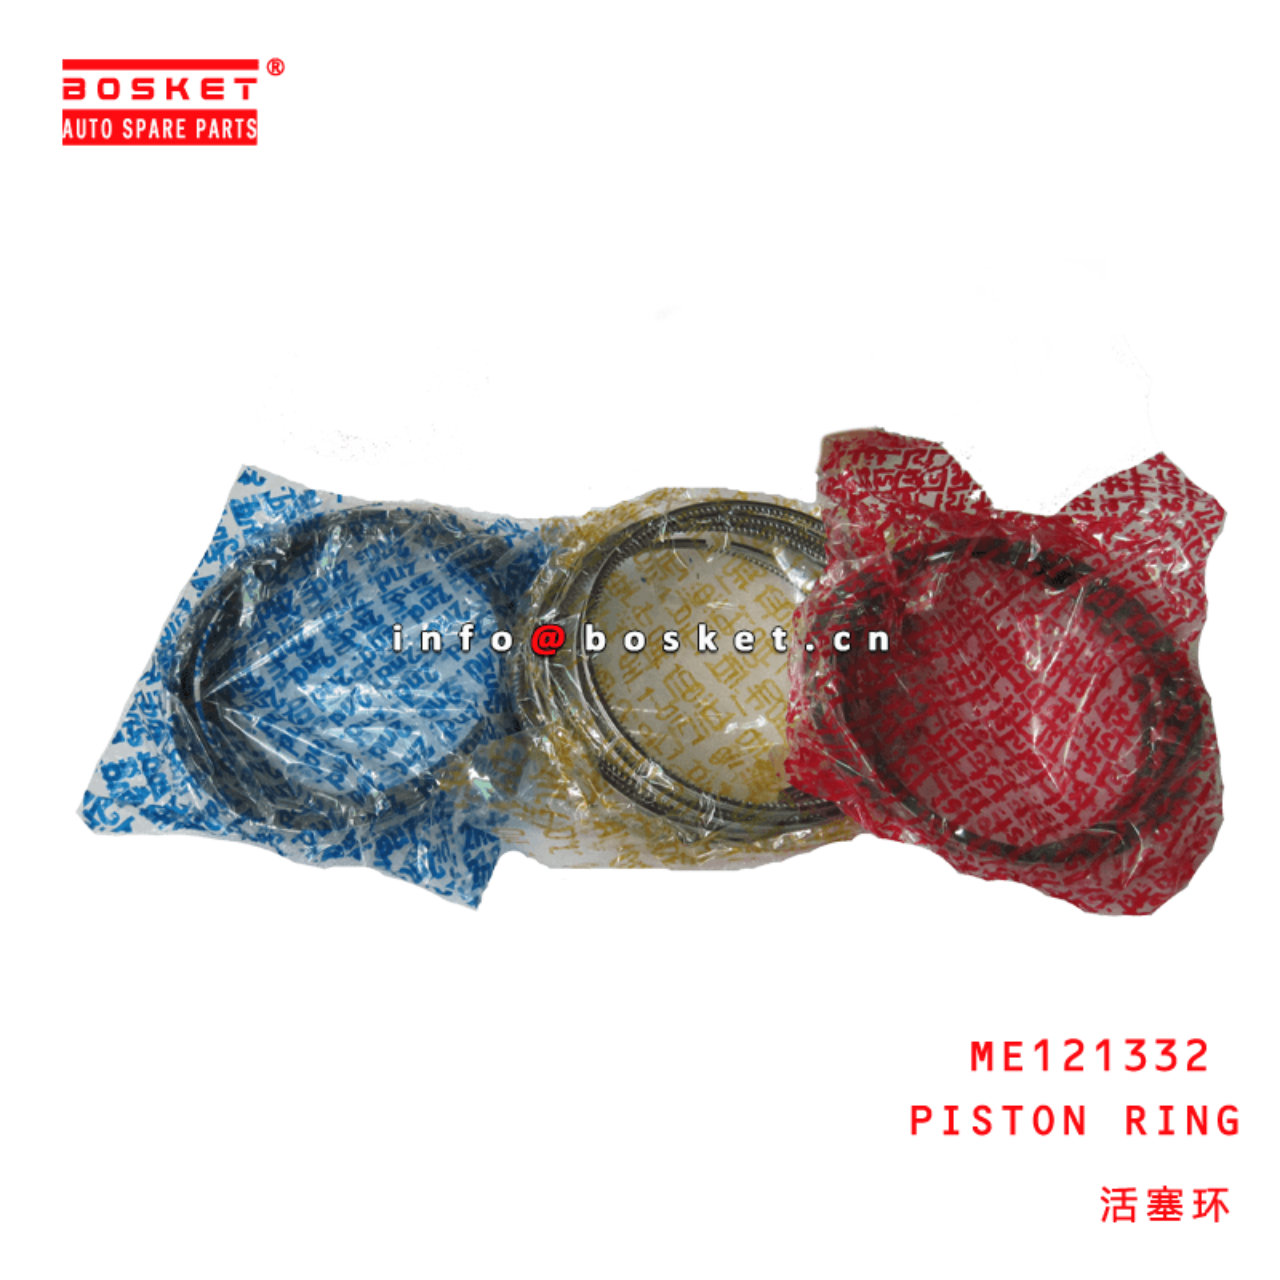  ME121332 Piston Ring Suitable For MITSUBISHI FUSO 6D40 